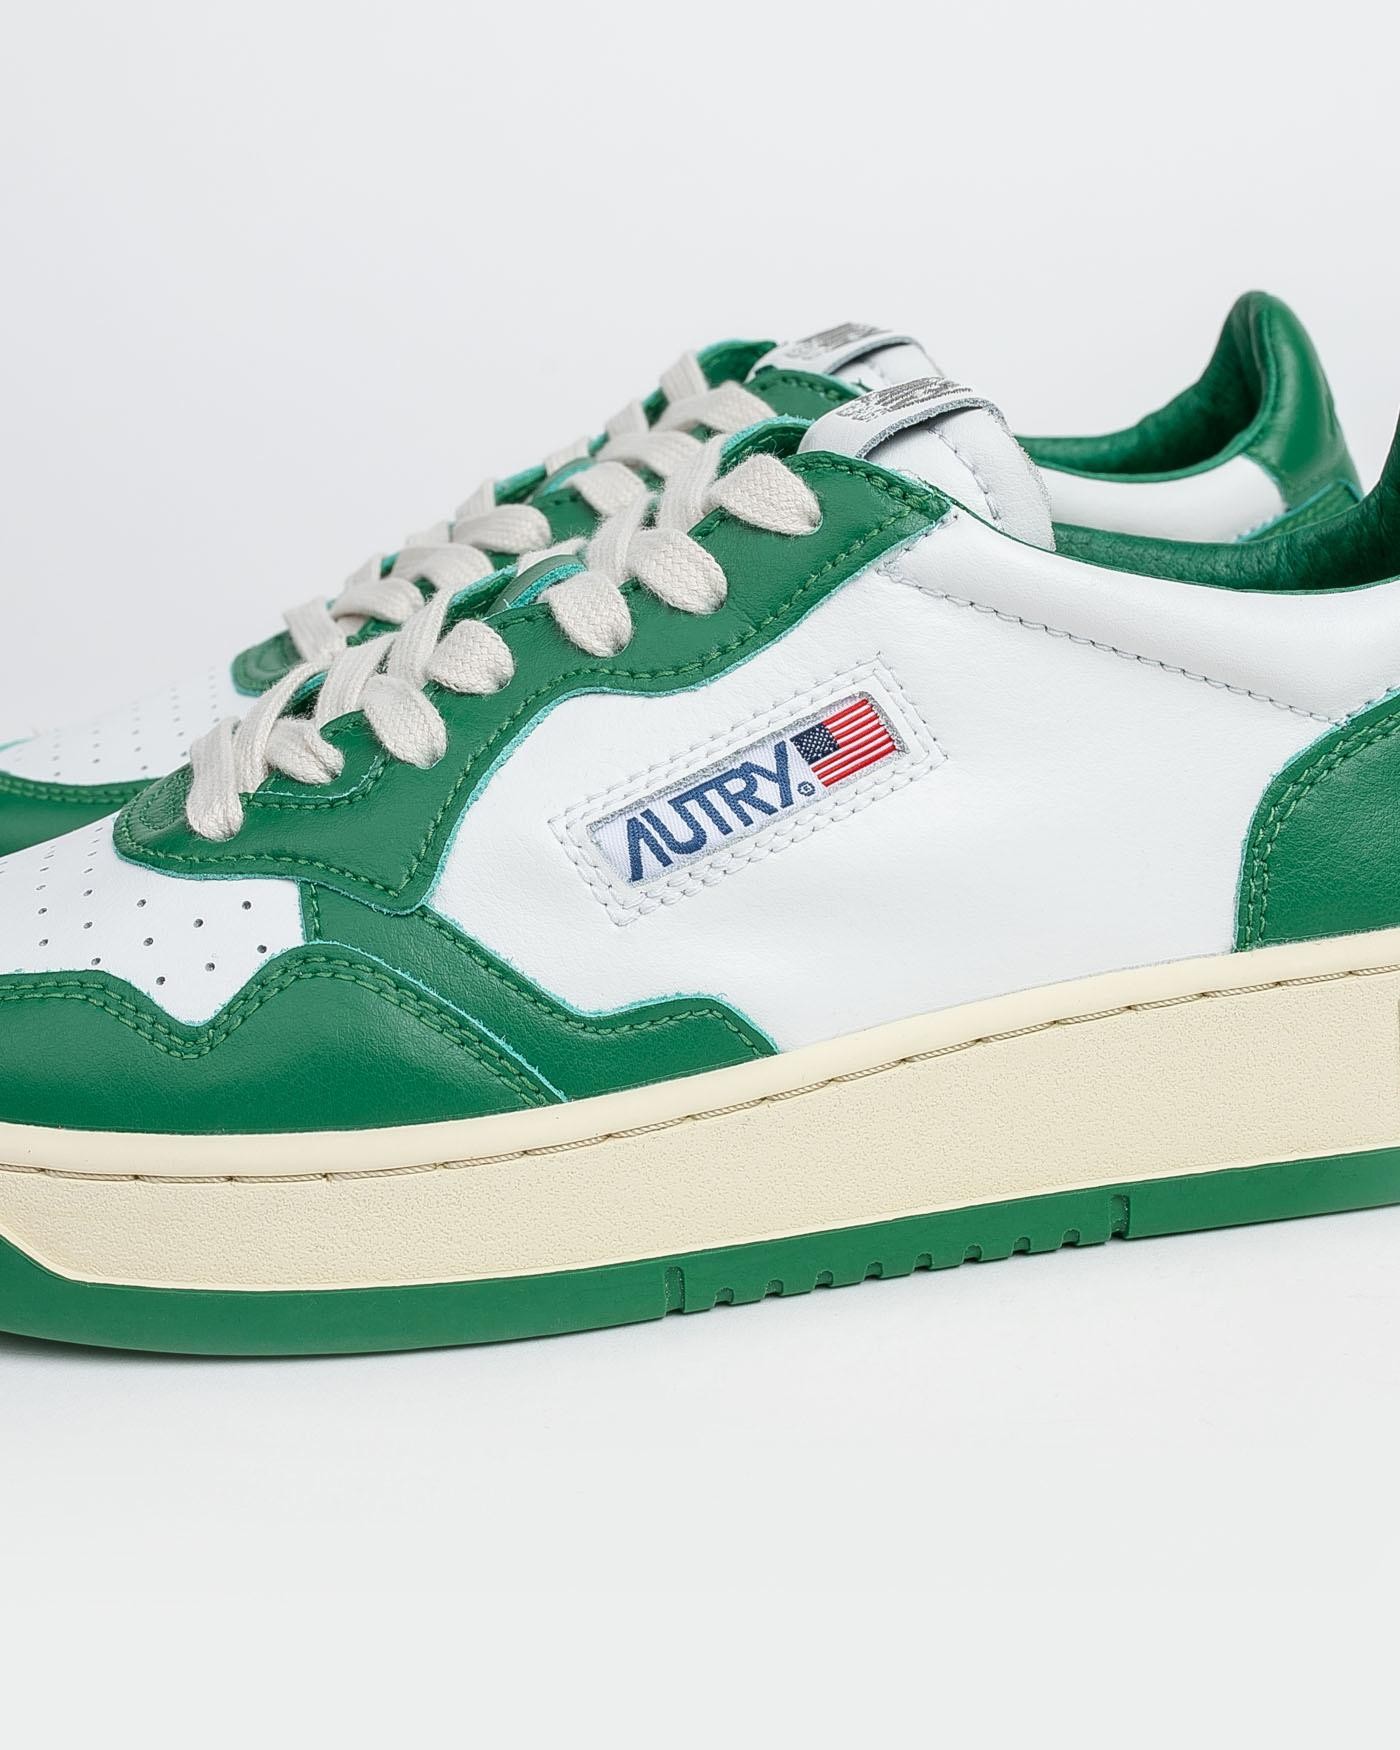 autry-zapatillas-aulm-wb-03-sneakers-white-green-blanco-verde 5